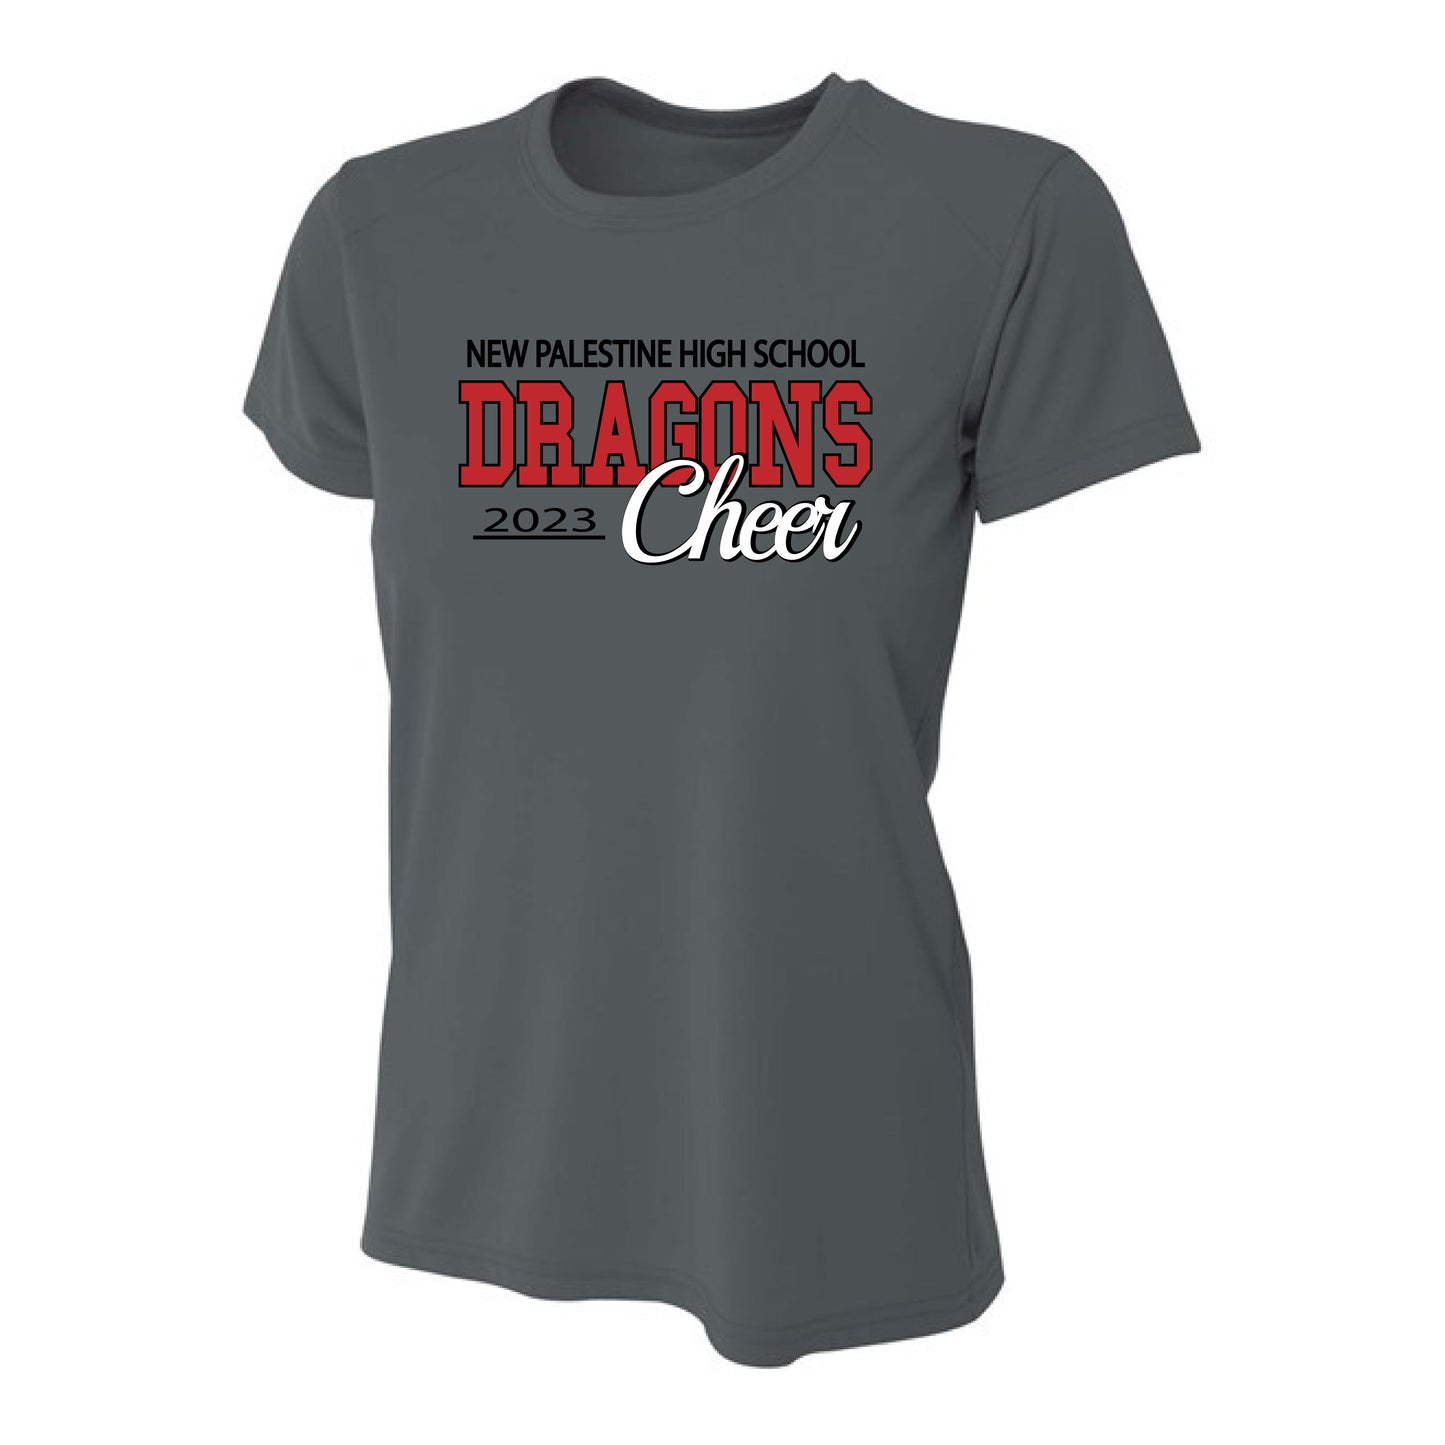 Womens S/S T-Shirt - Dragons Cheer '23